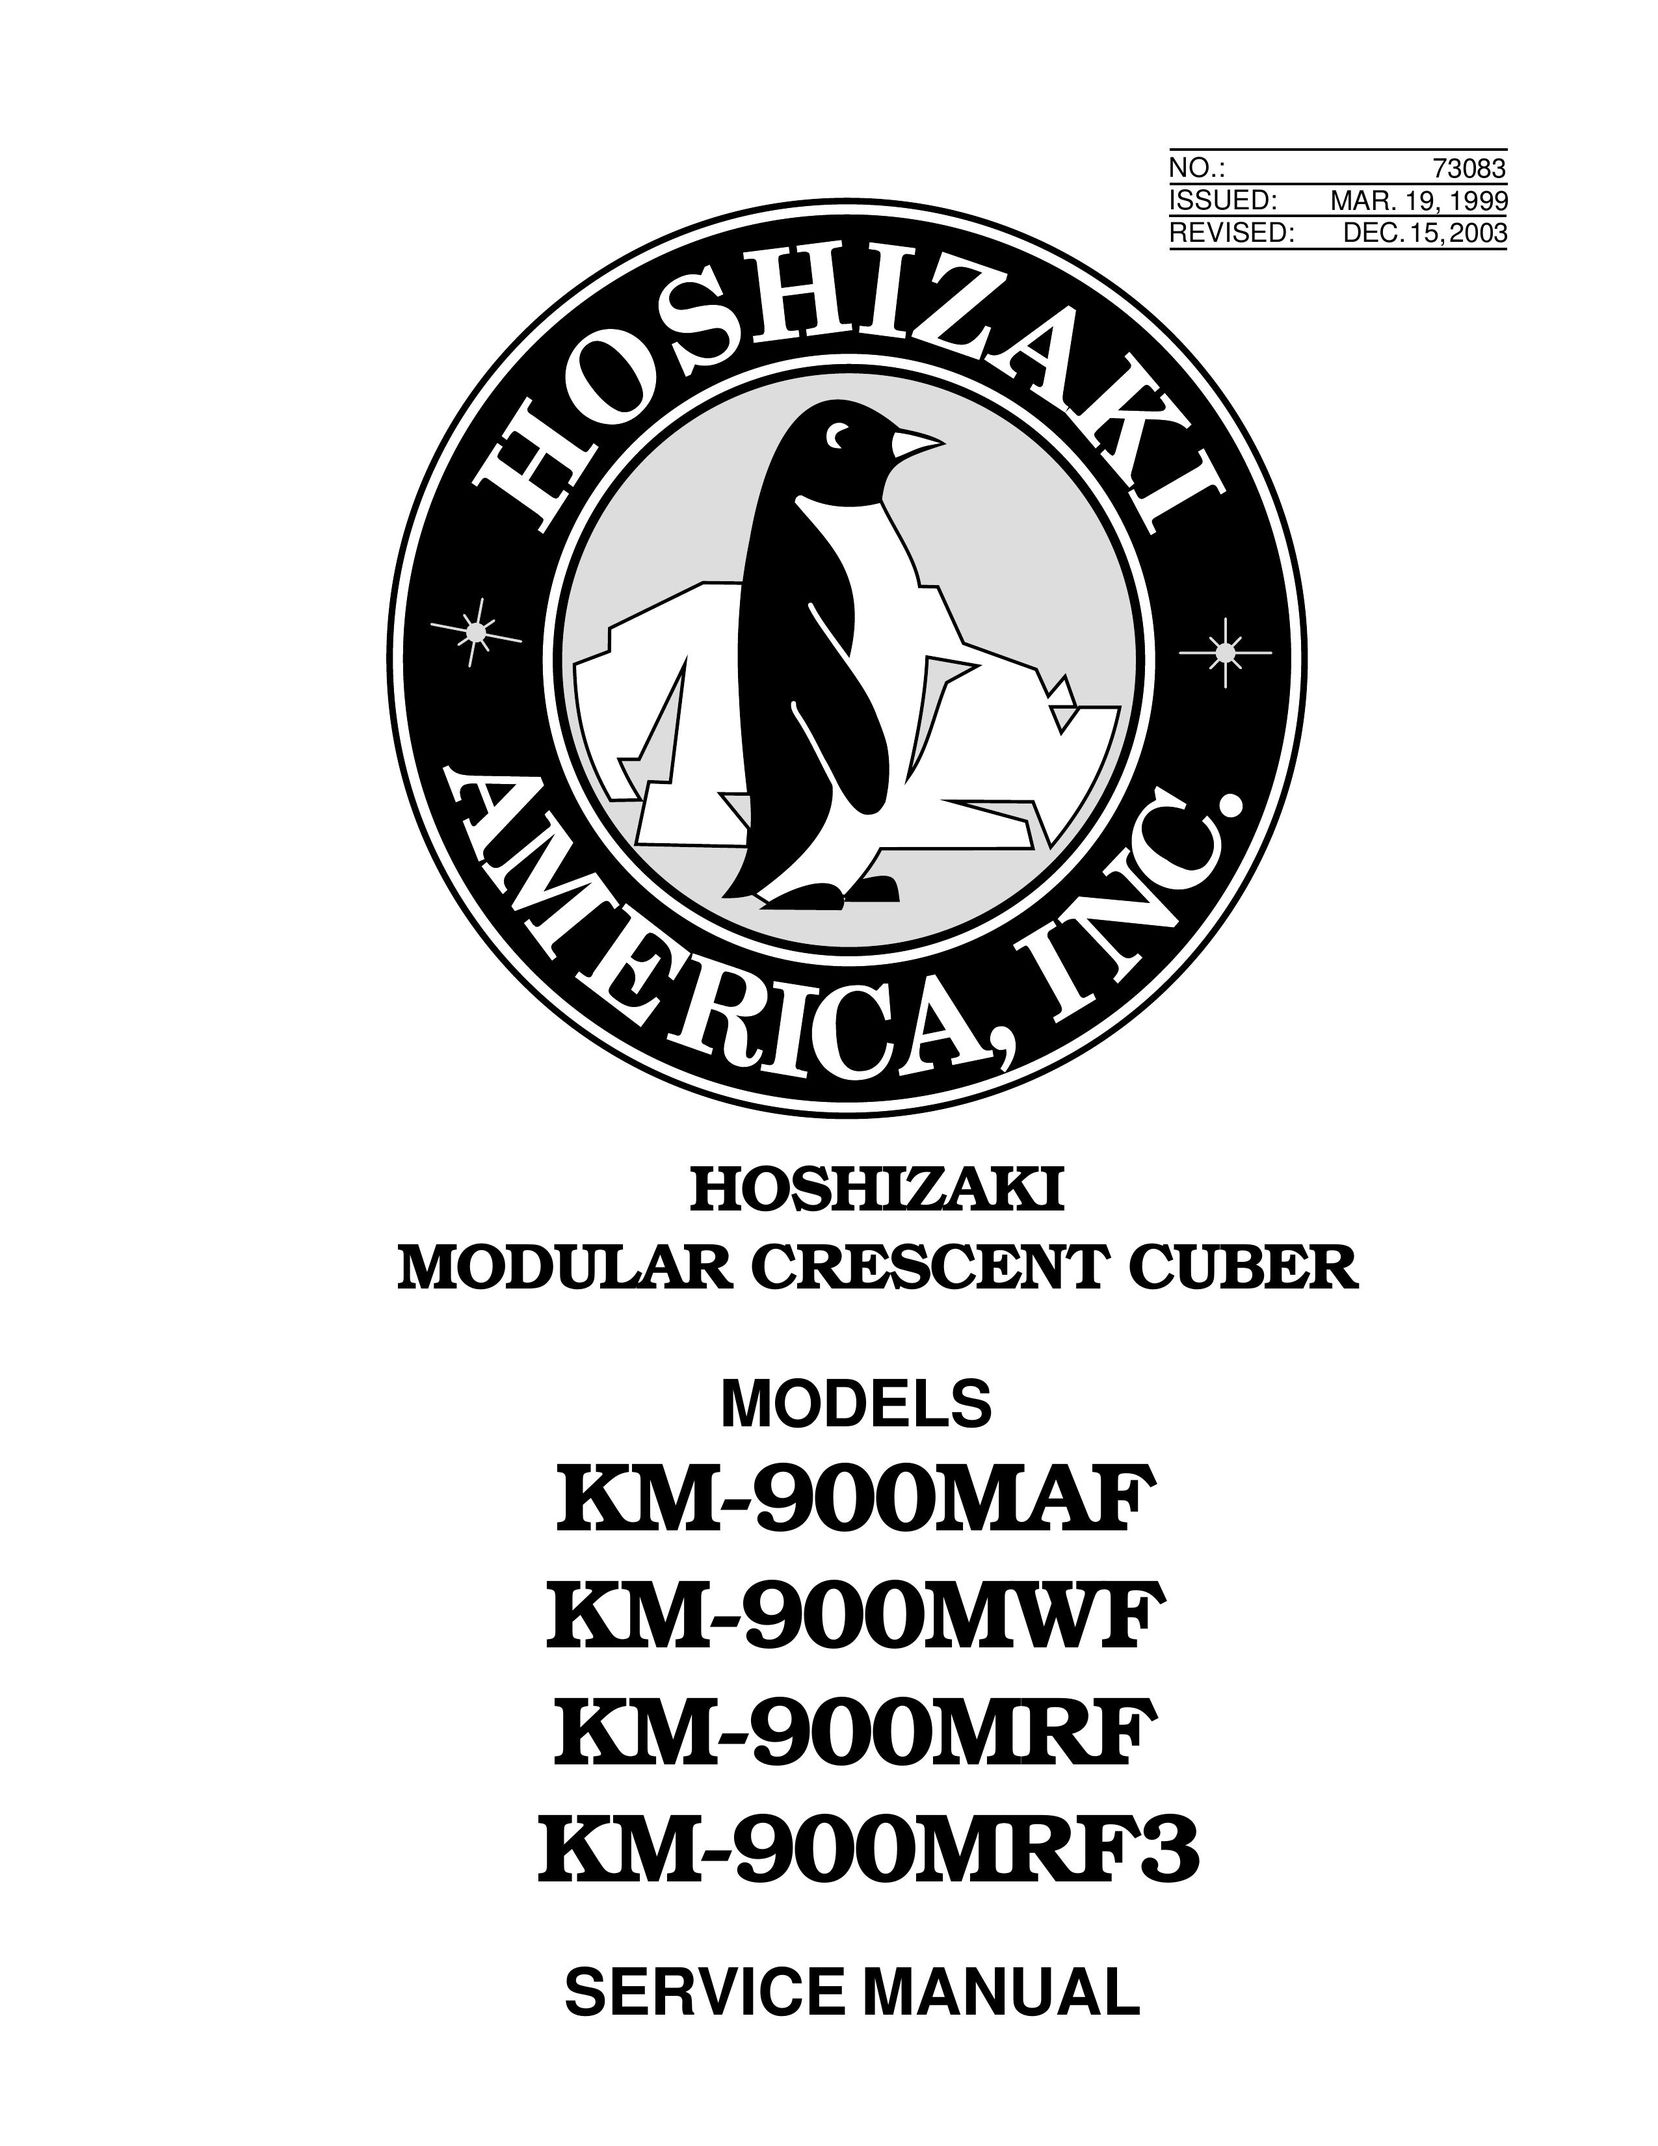 Hoshizaki KM-900MAF Cooktop User Manual